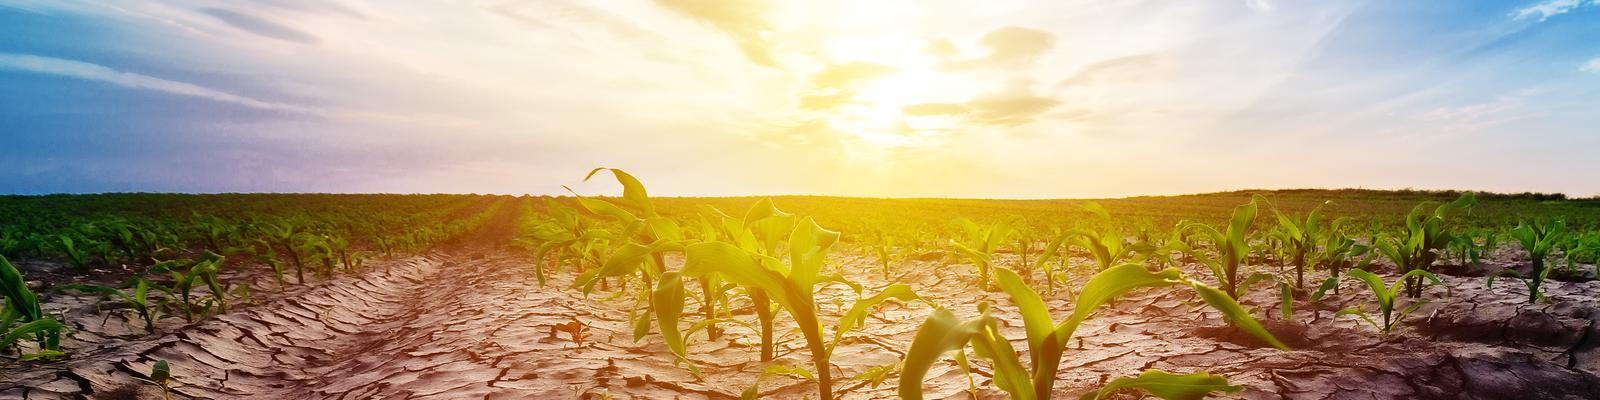 Drought in cultivated corn maize crop field. 